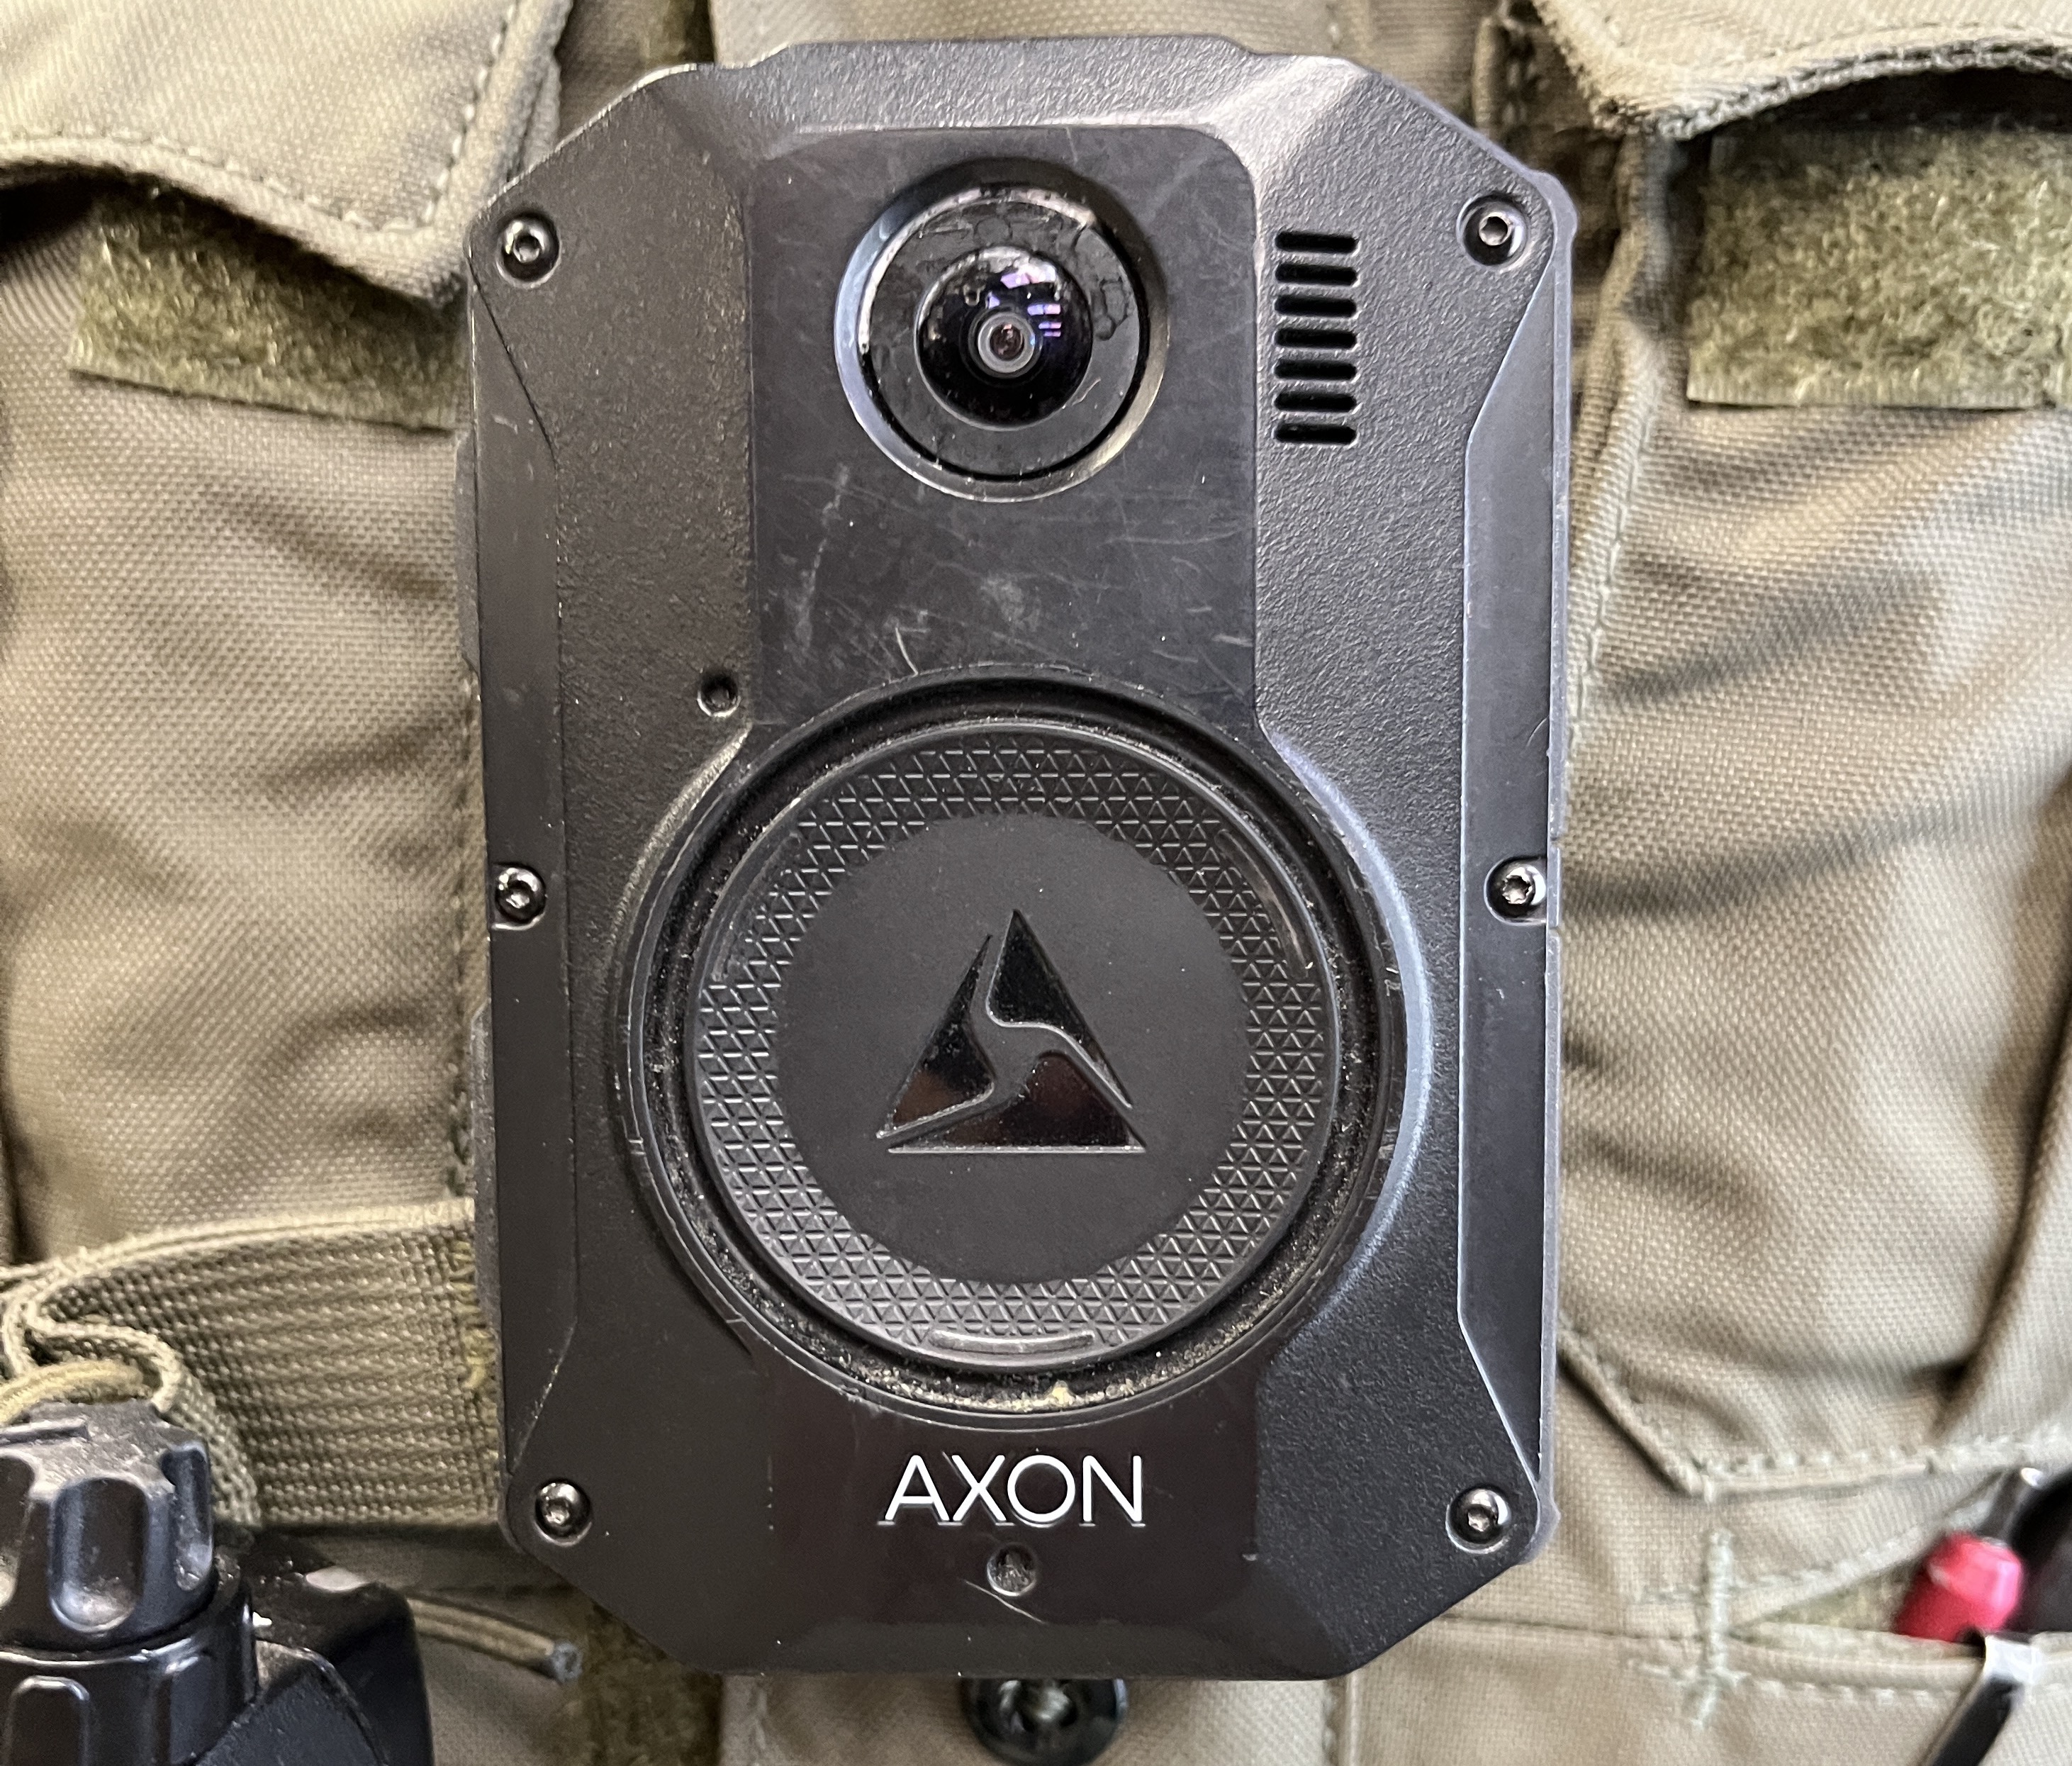 A close-up of an Axon body-worn camera